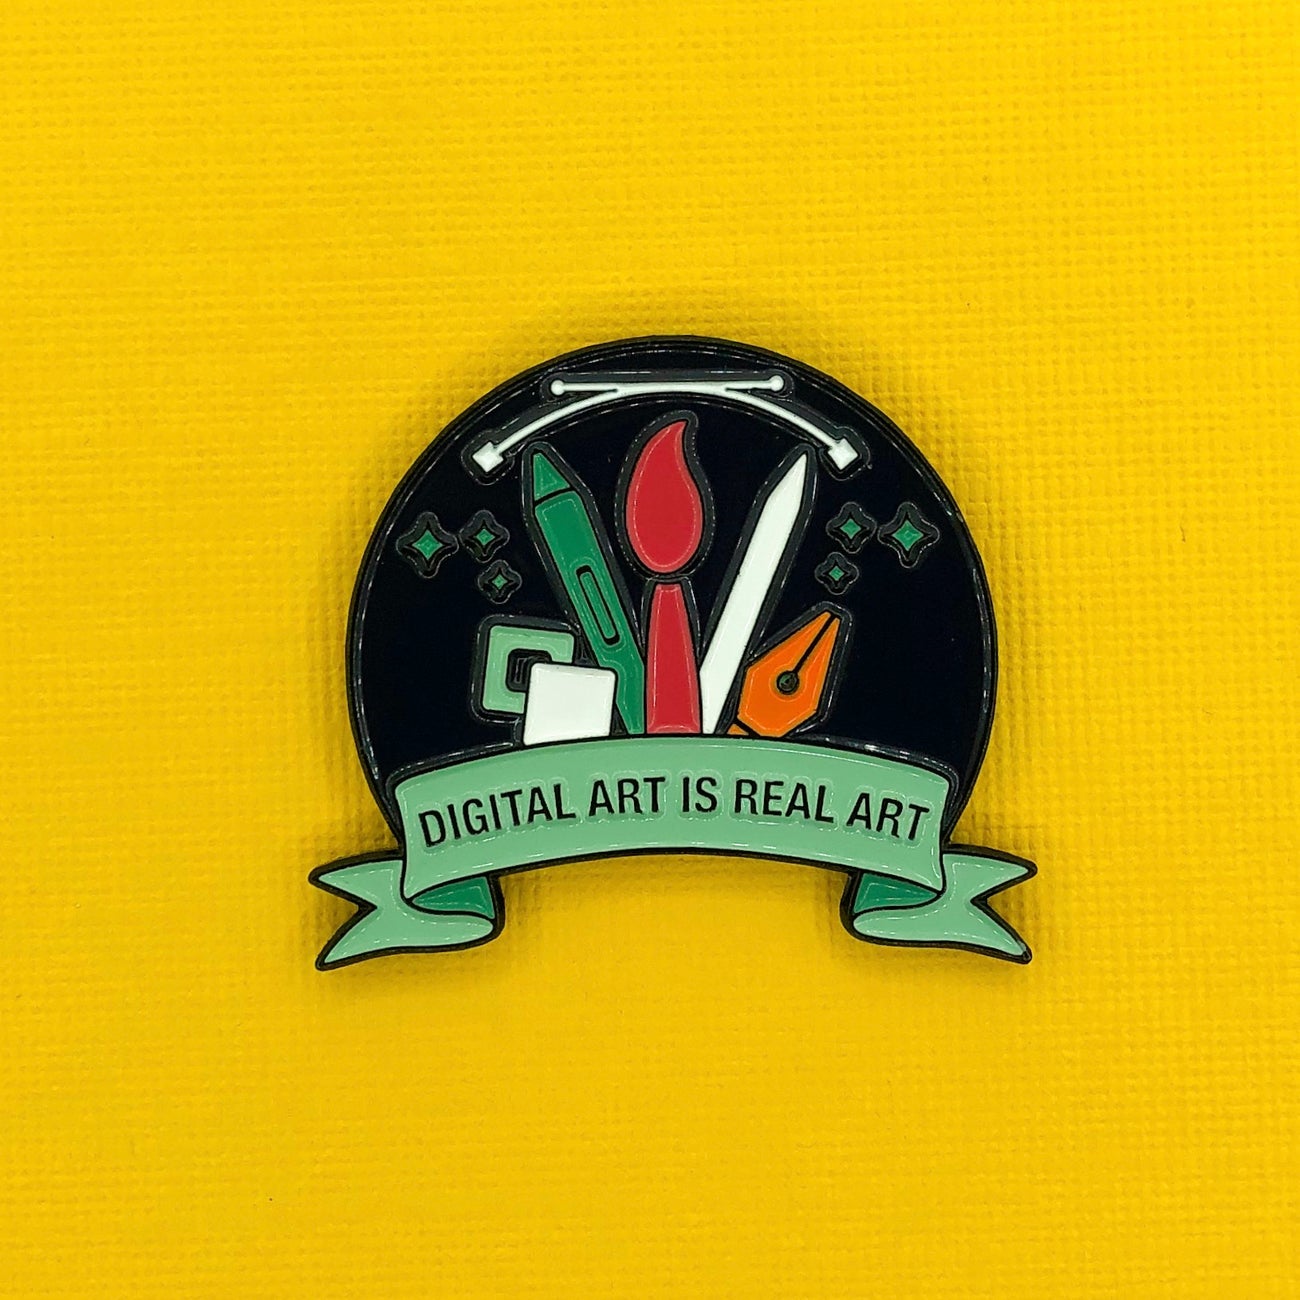 Digital Art Is Real Art Pin